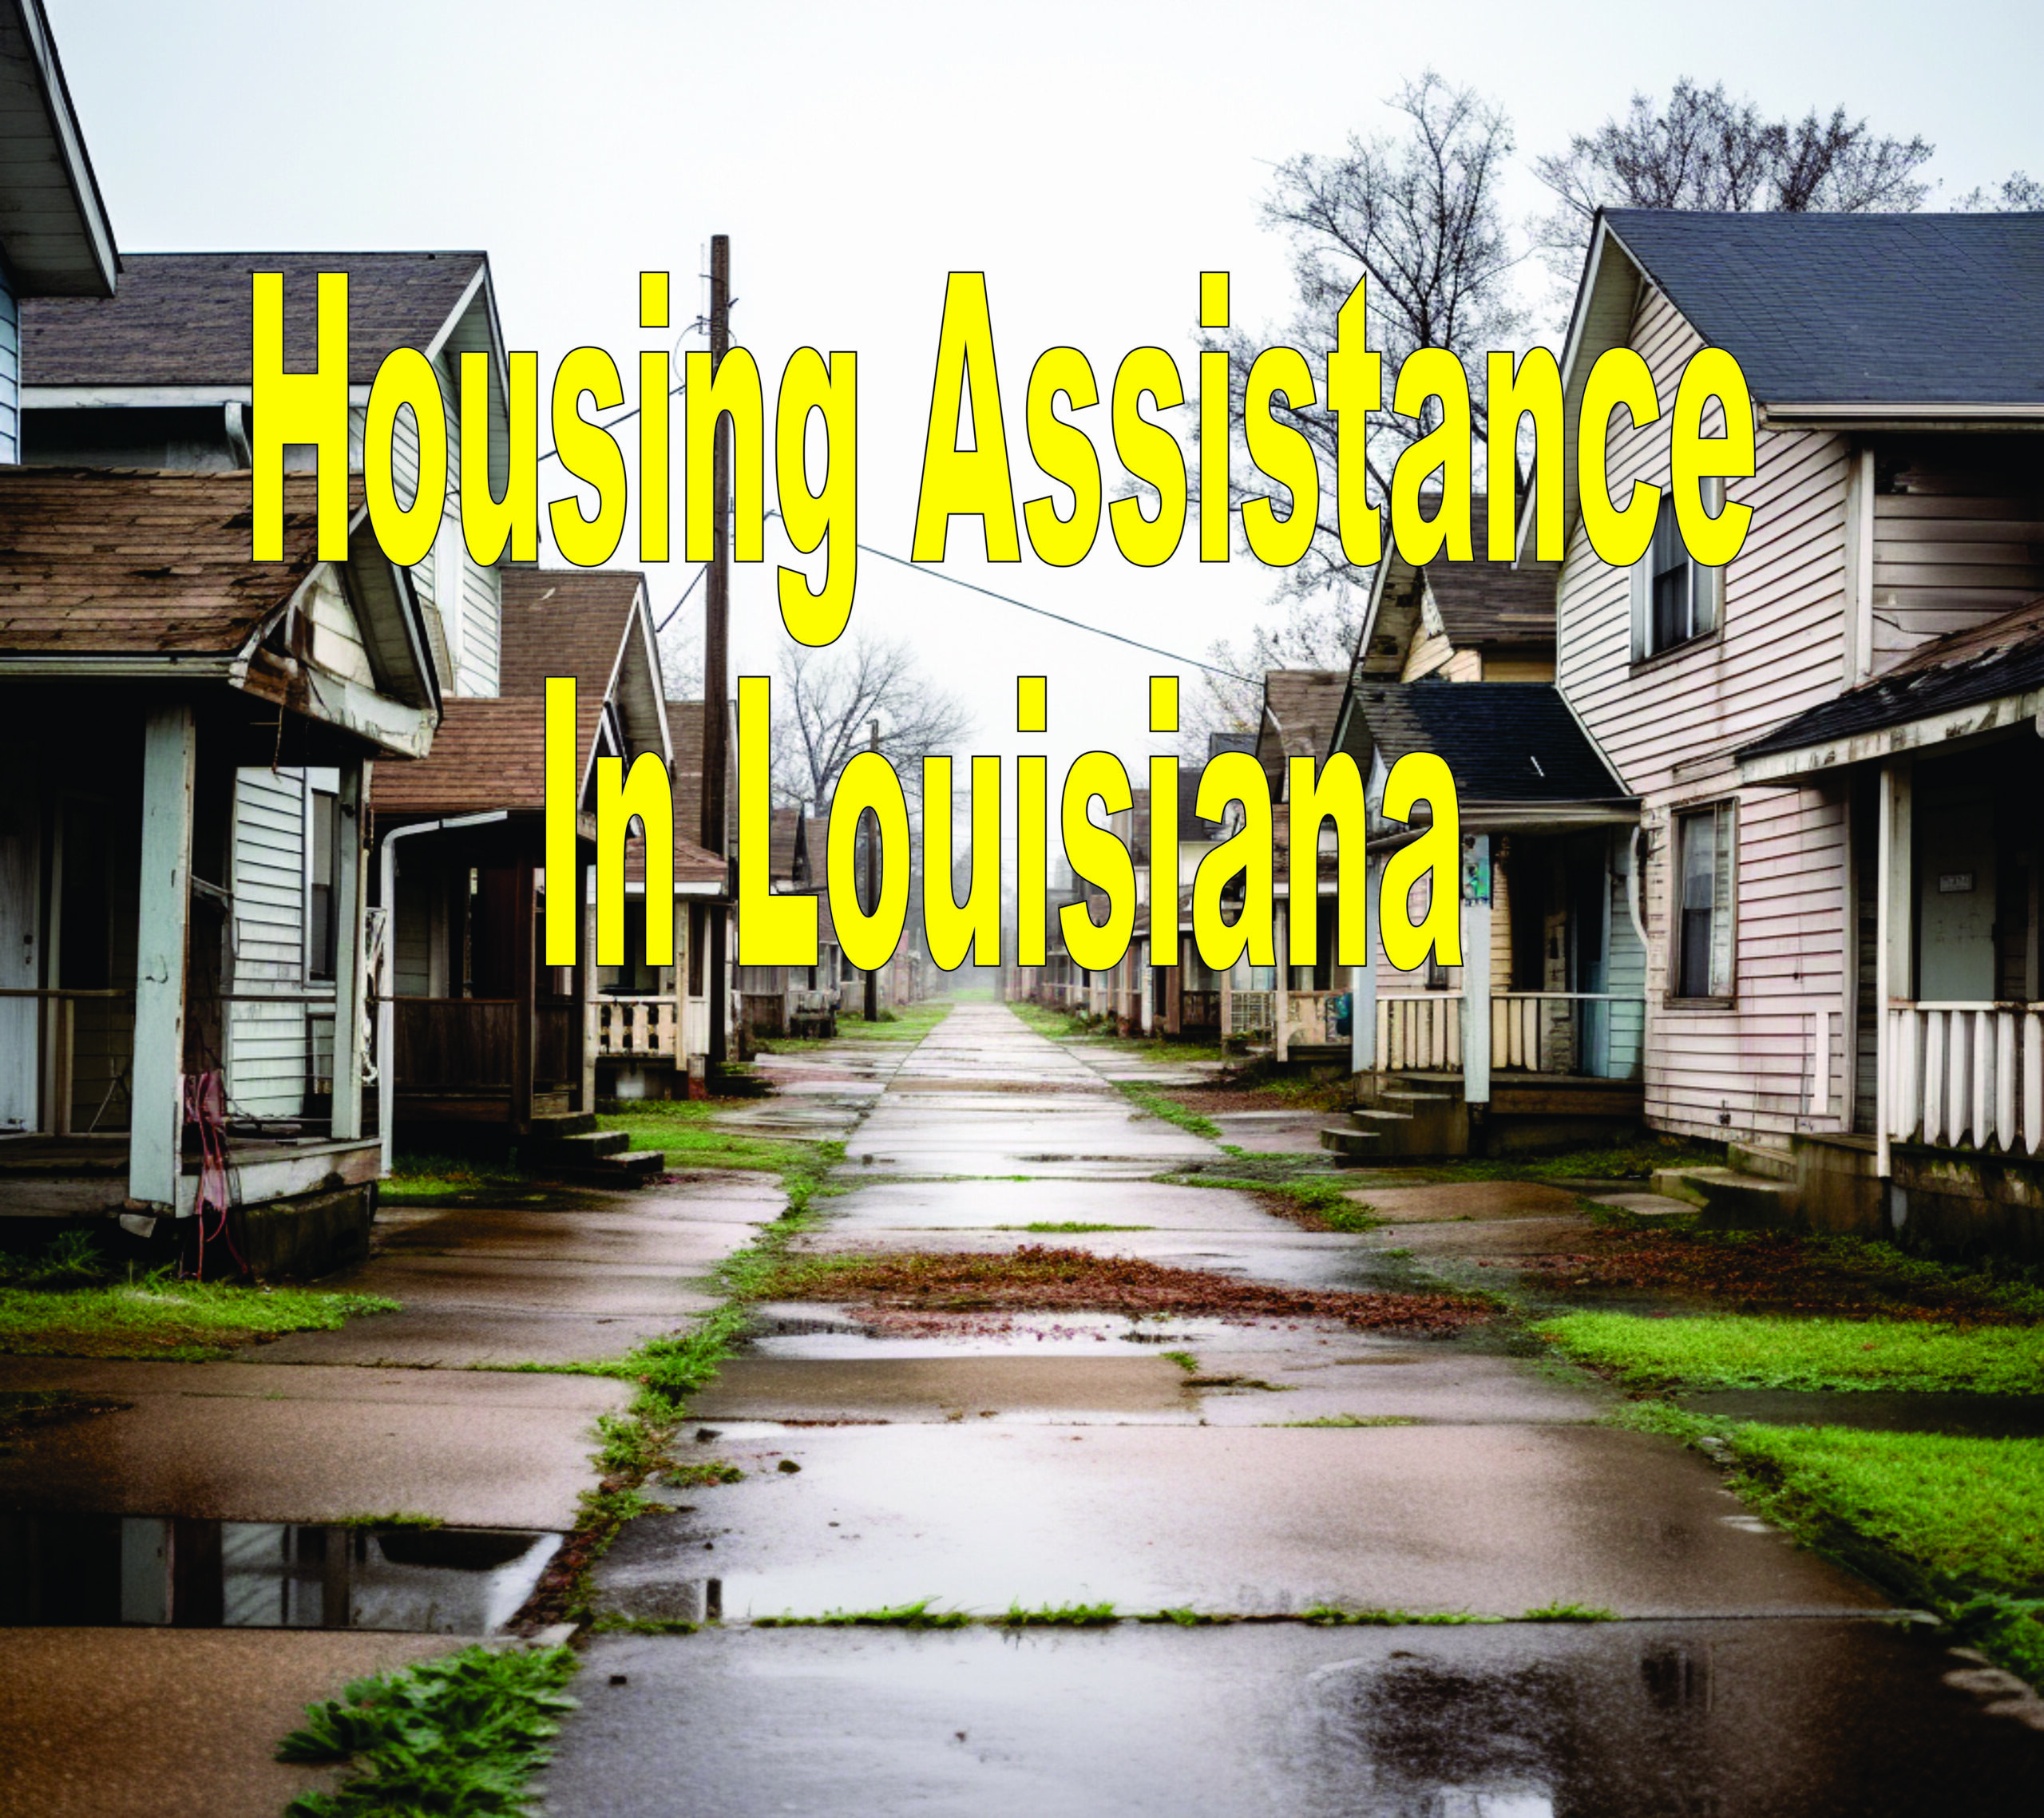 Housing Assistance In Louisiana